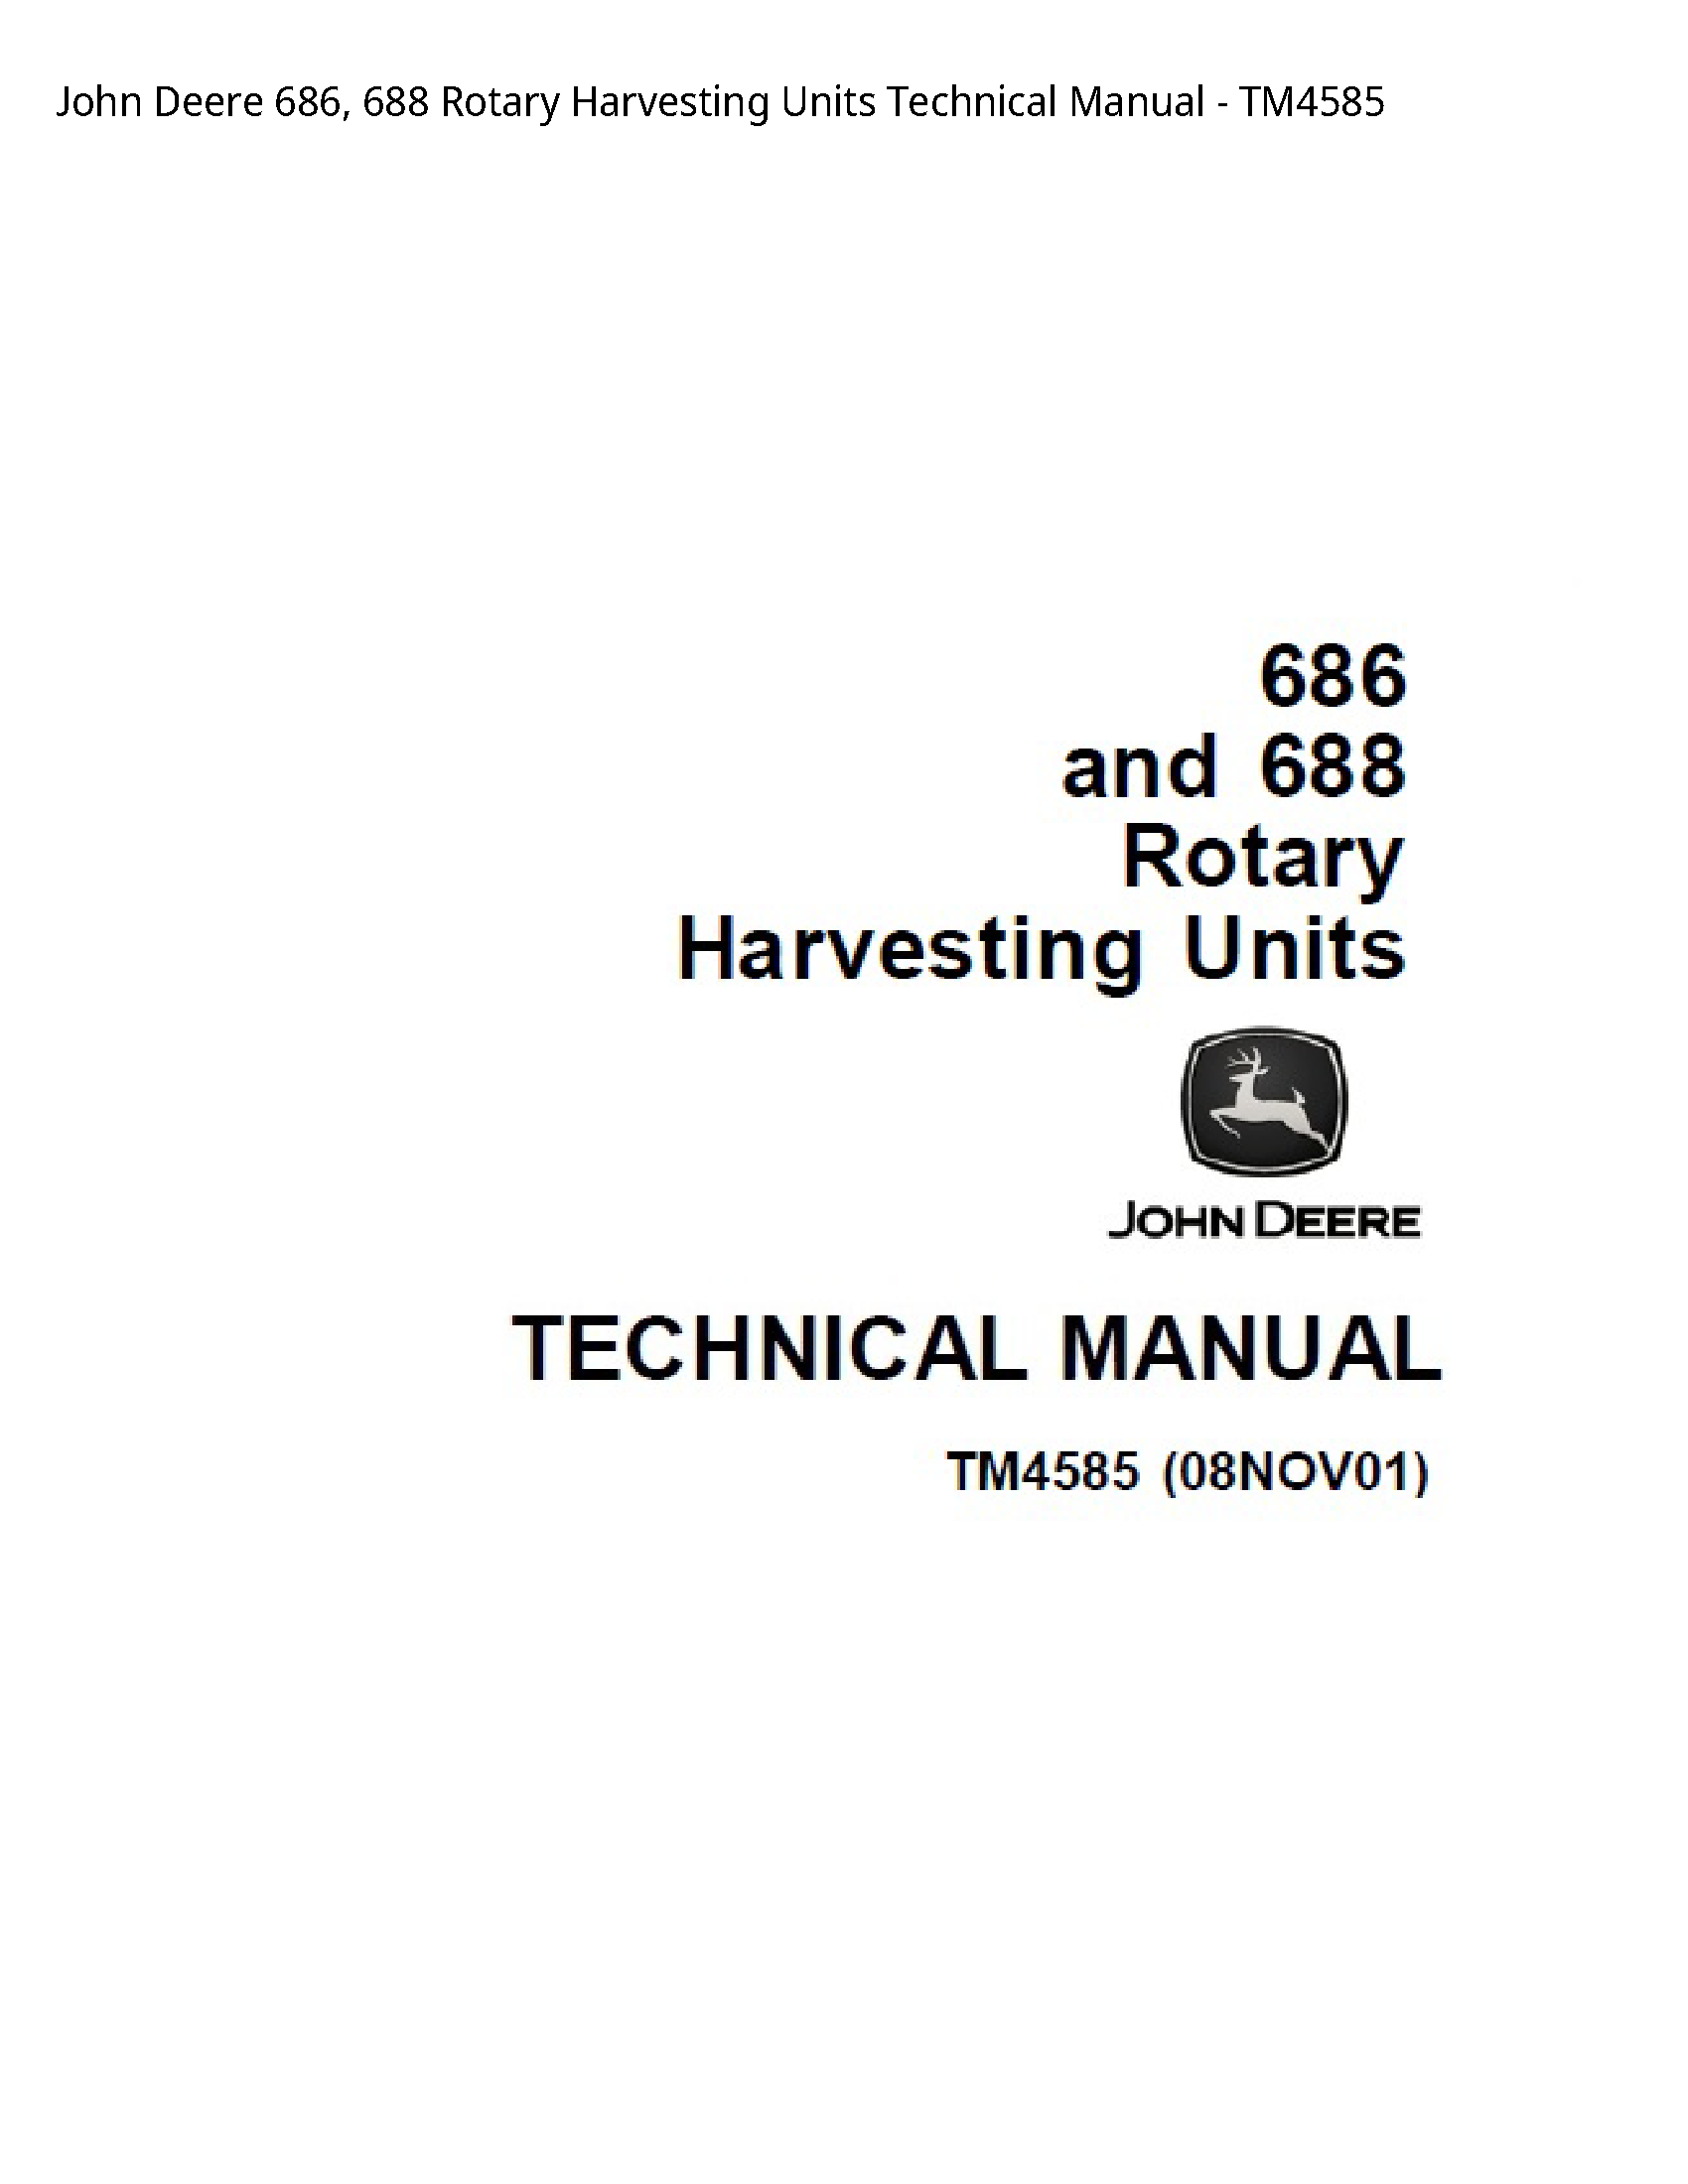 John Deere 686 Rotary Harvesting Units Technical manual